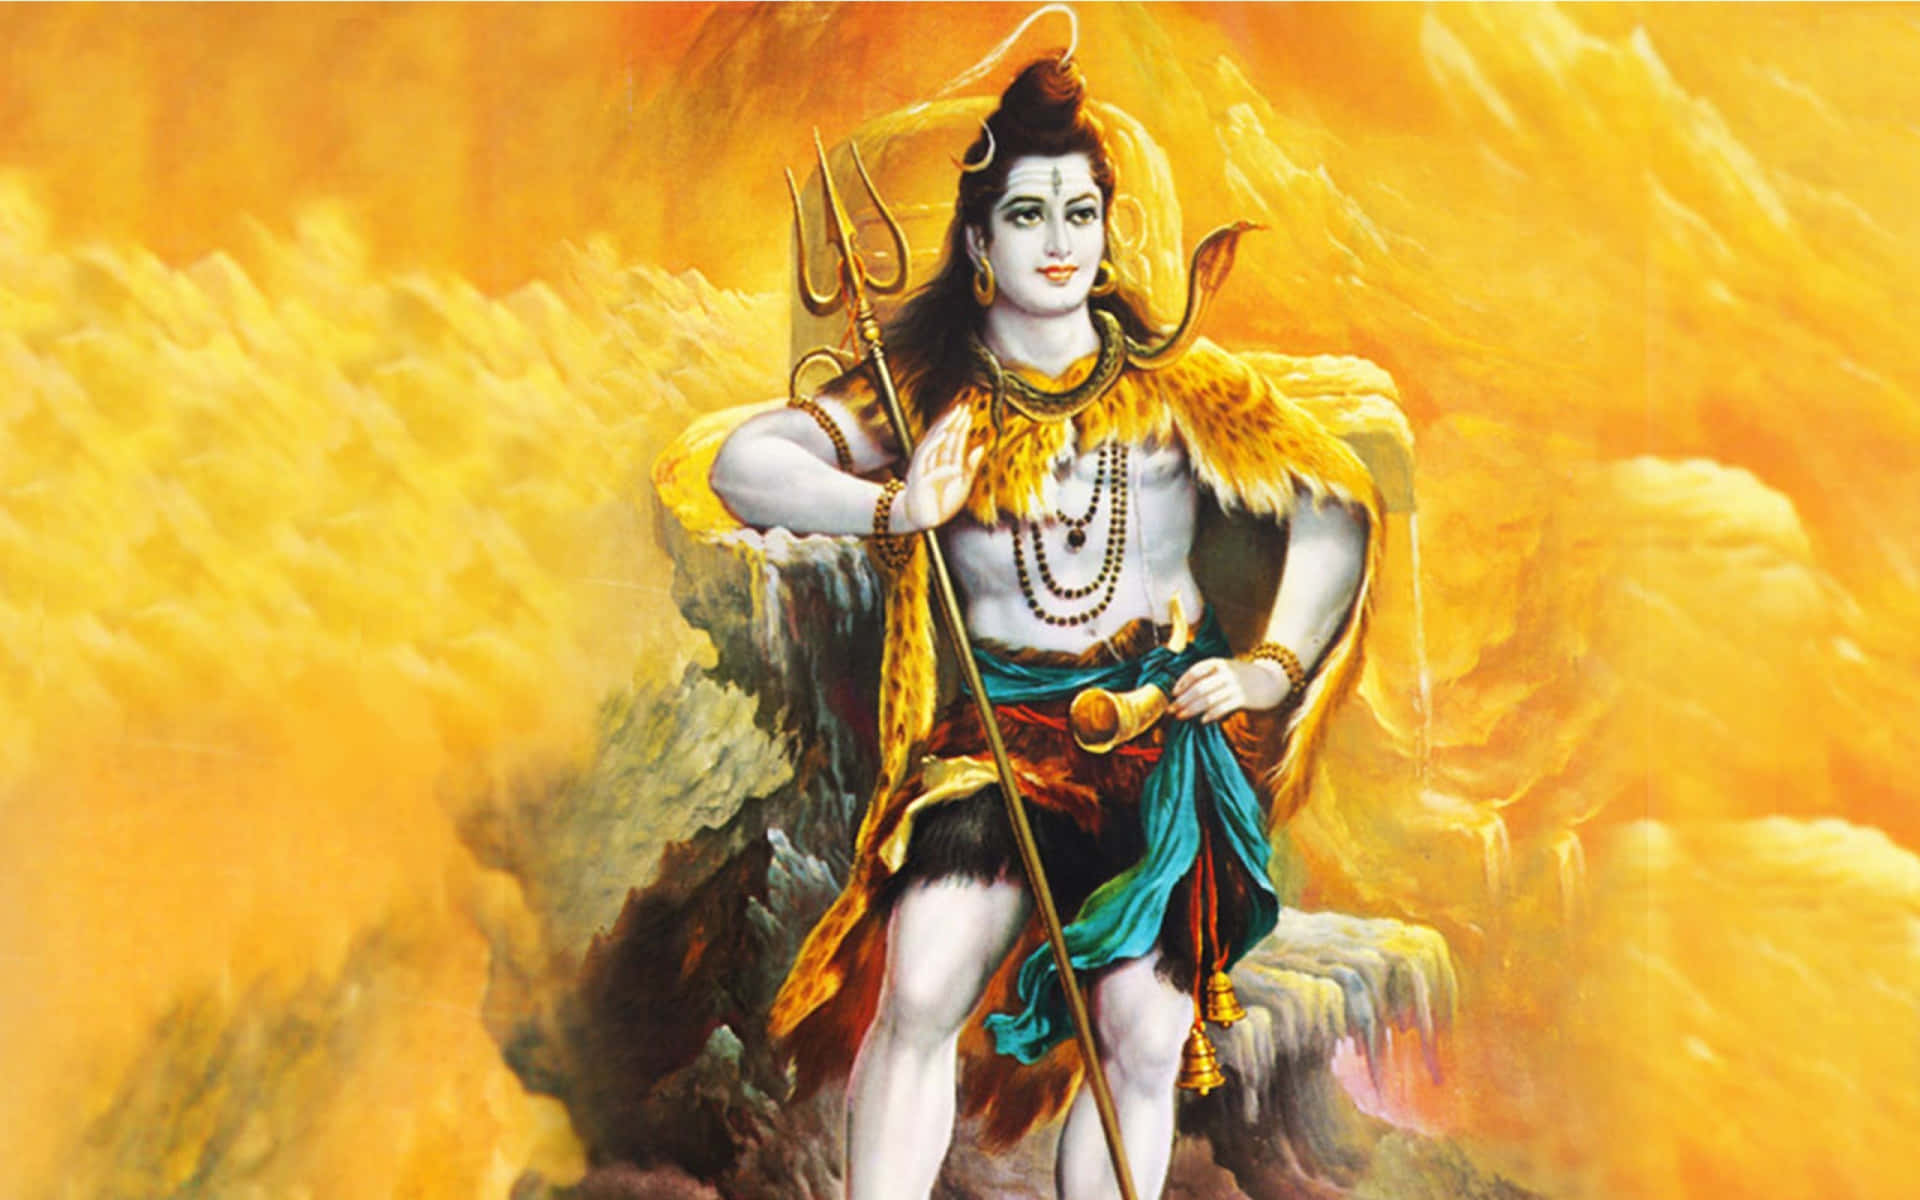 Shiva, the Indian god of destruction